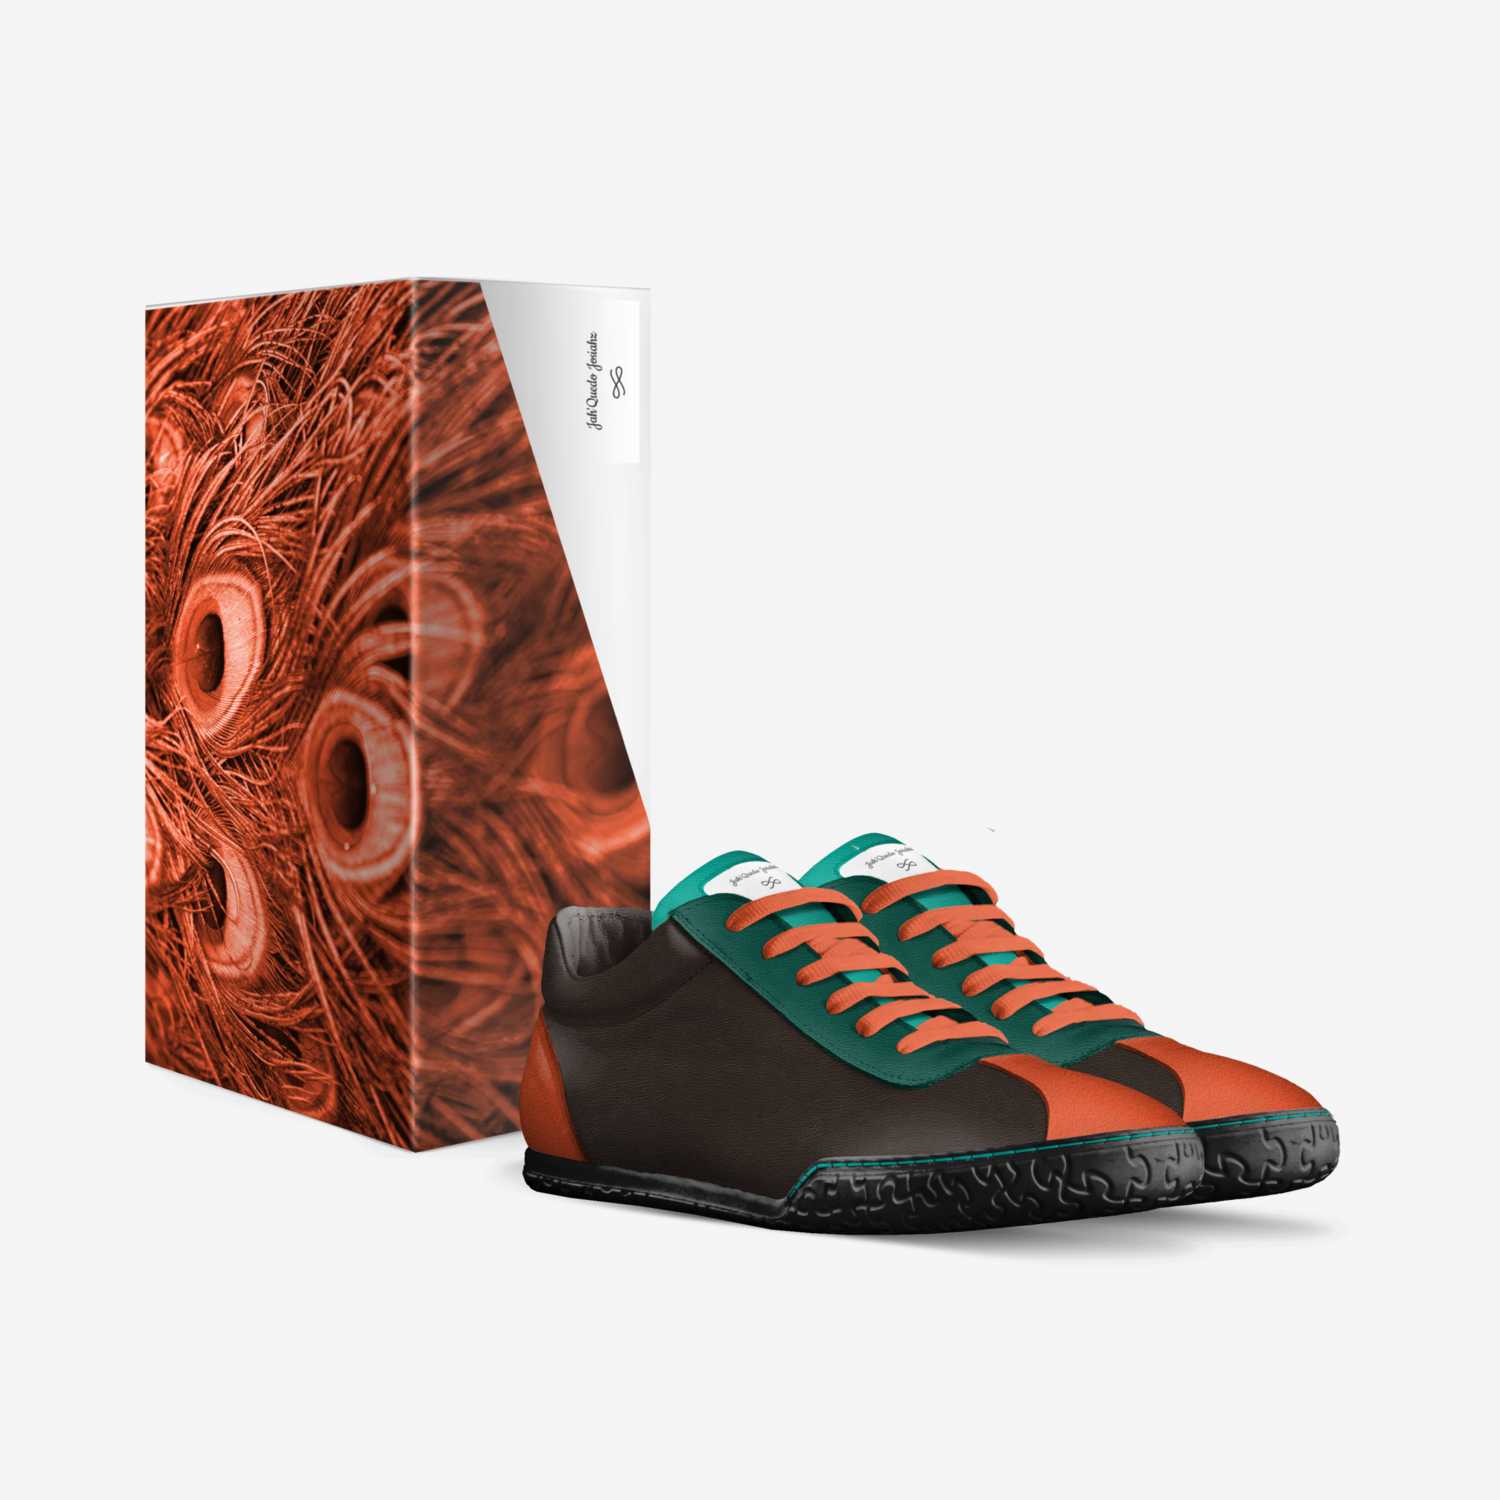 Jah'Quedo Josiahz custom made in Italy shoes by Jestus Jones | Box view